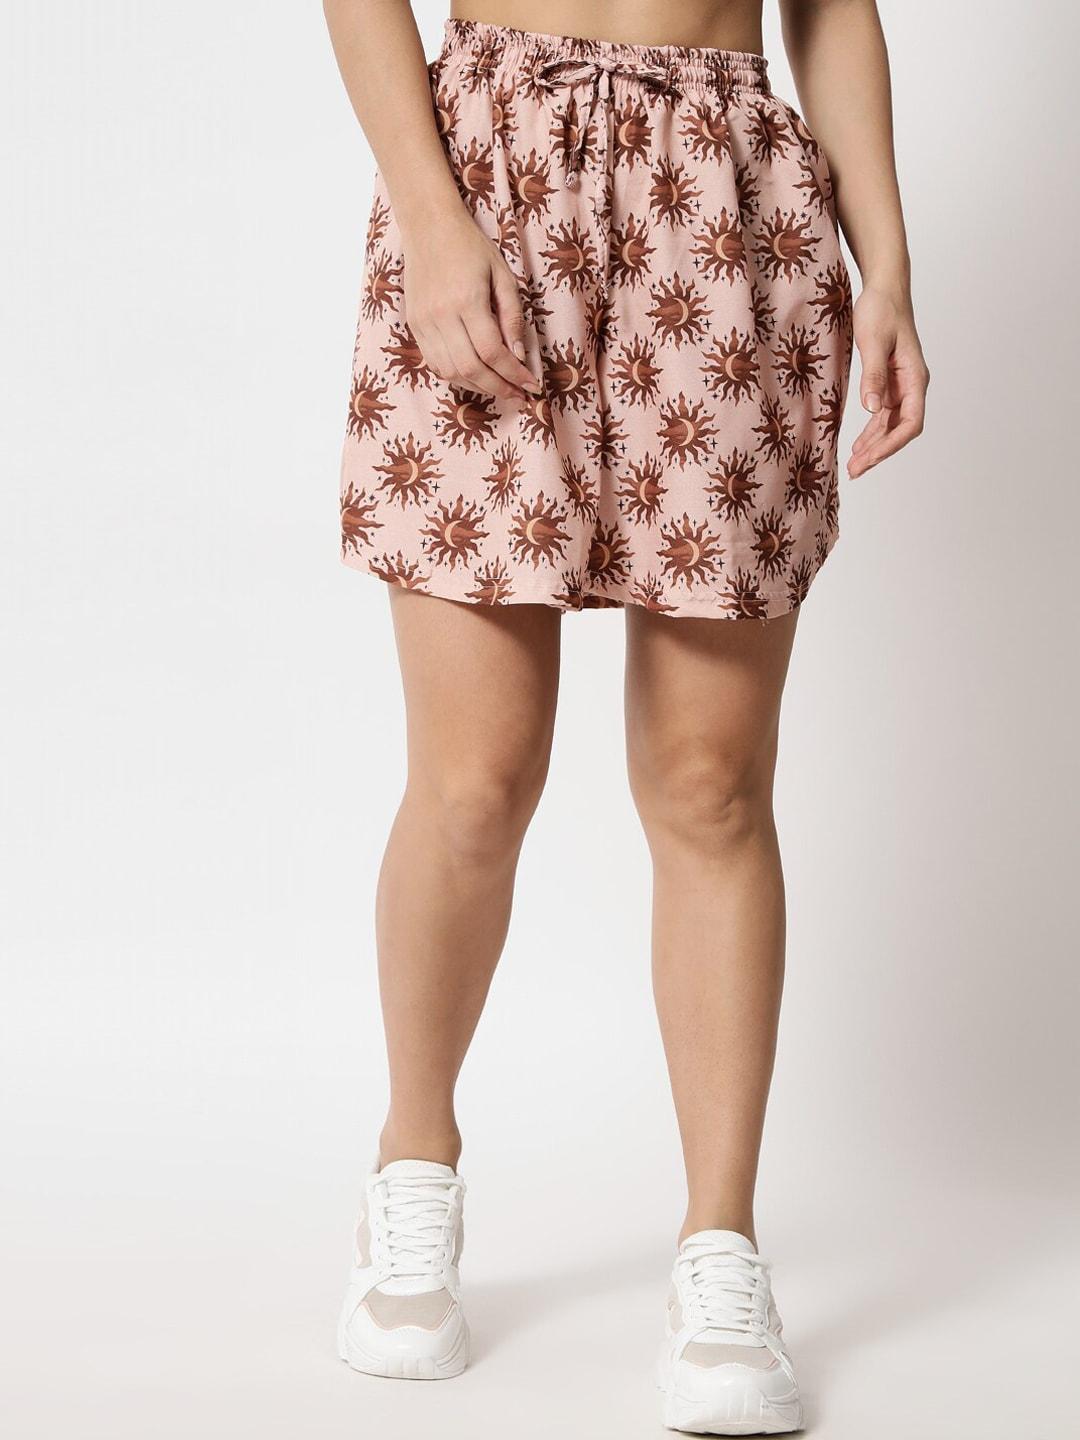 FFLIRTYGO Women Beige Conversational Printed Loose Fit Shorts